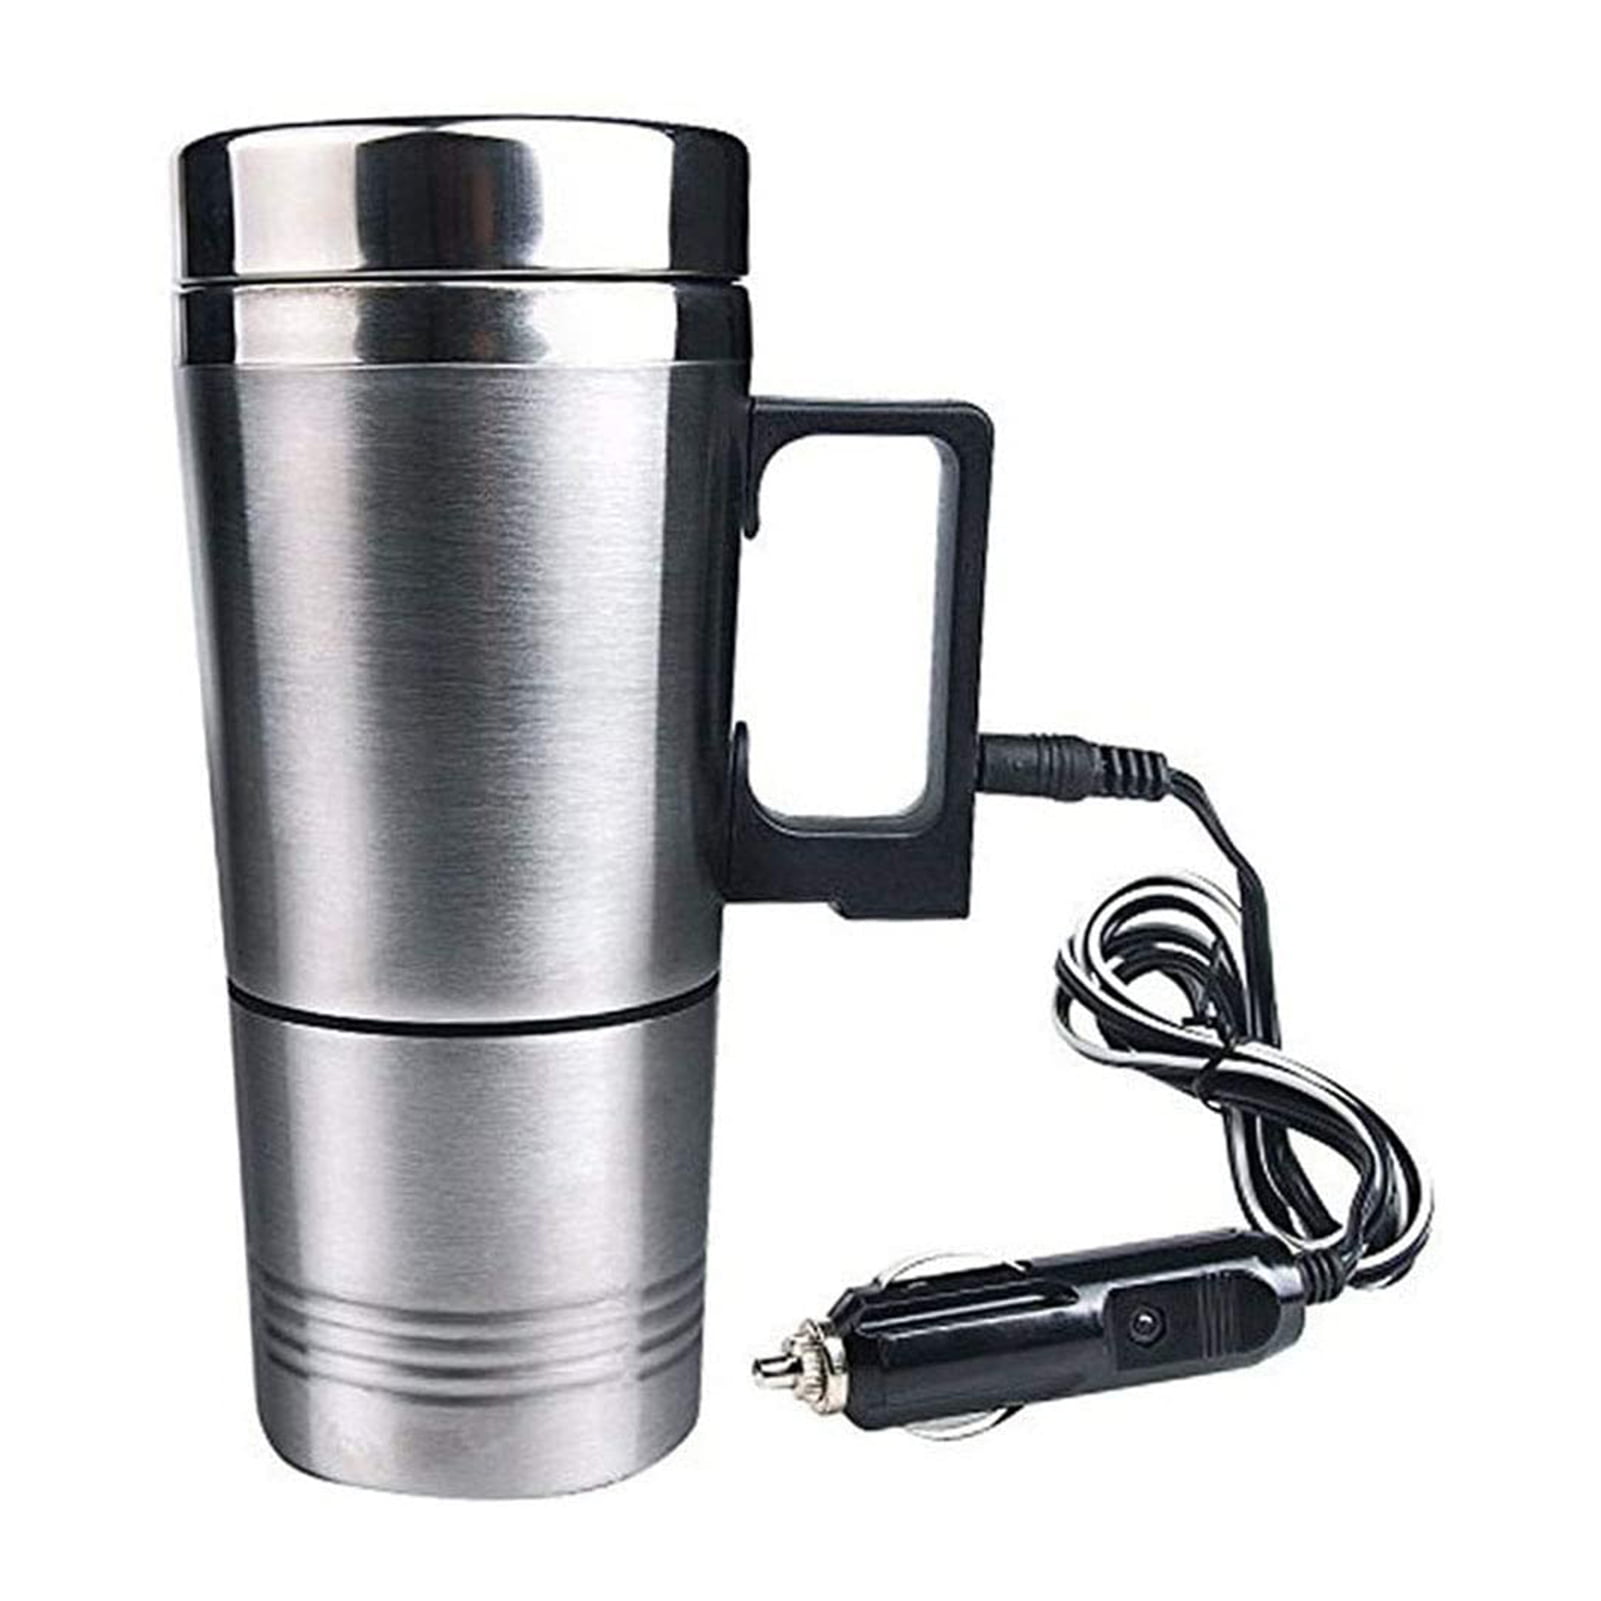 12V/24V Car Heating Cup Car Heated Mug Electric Car Kettle Safe Removable Travel USB Heating Cup 